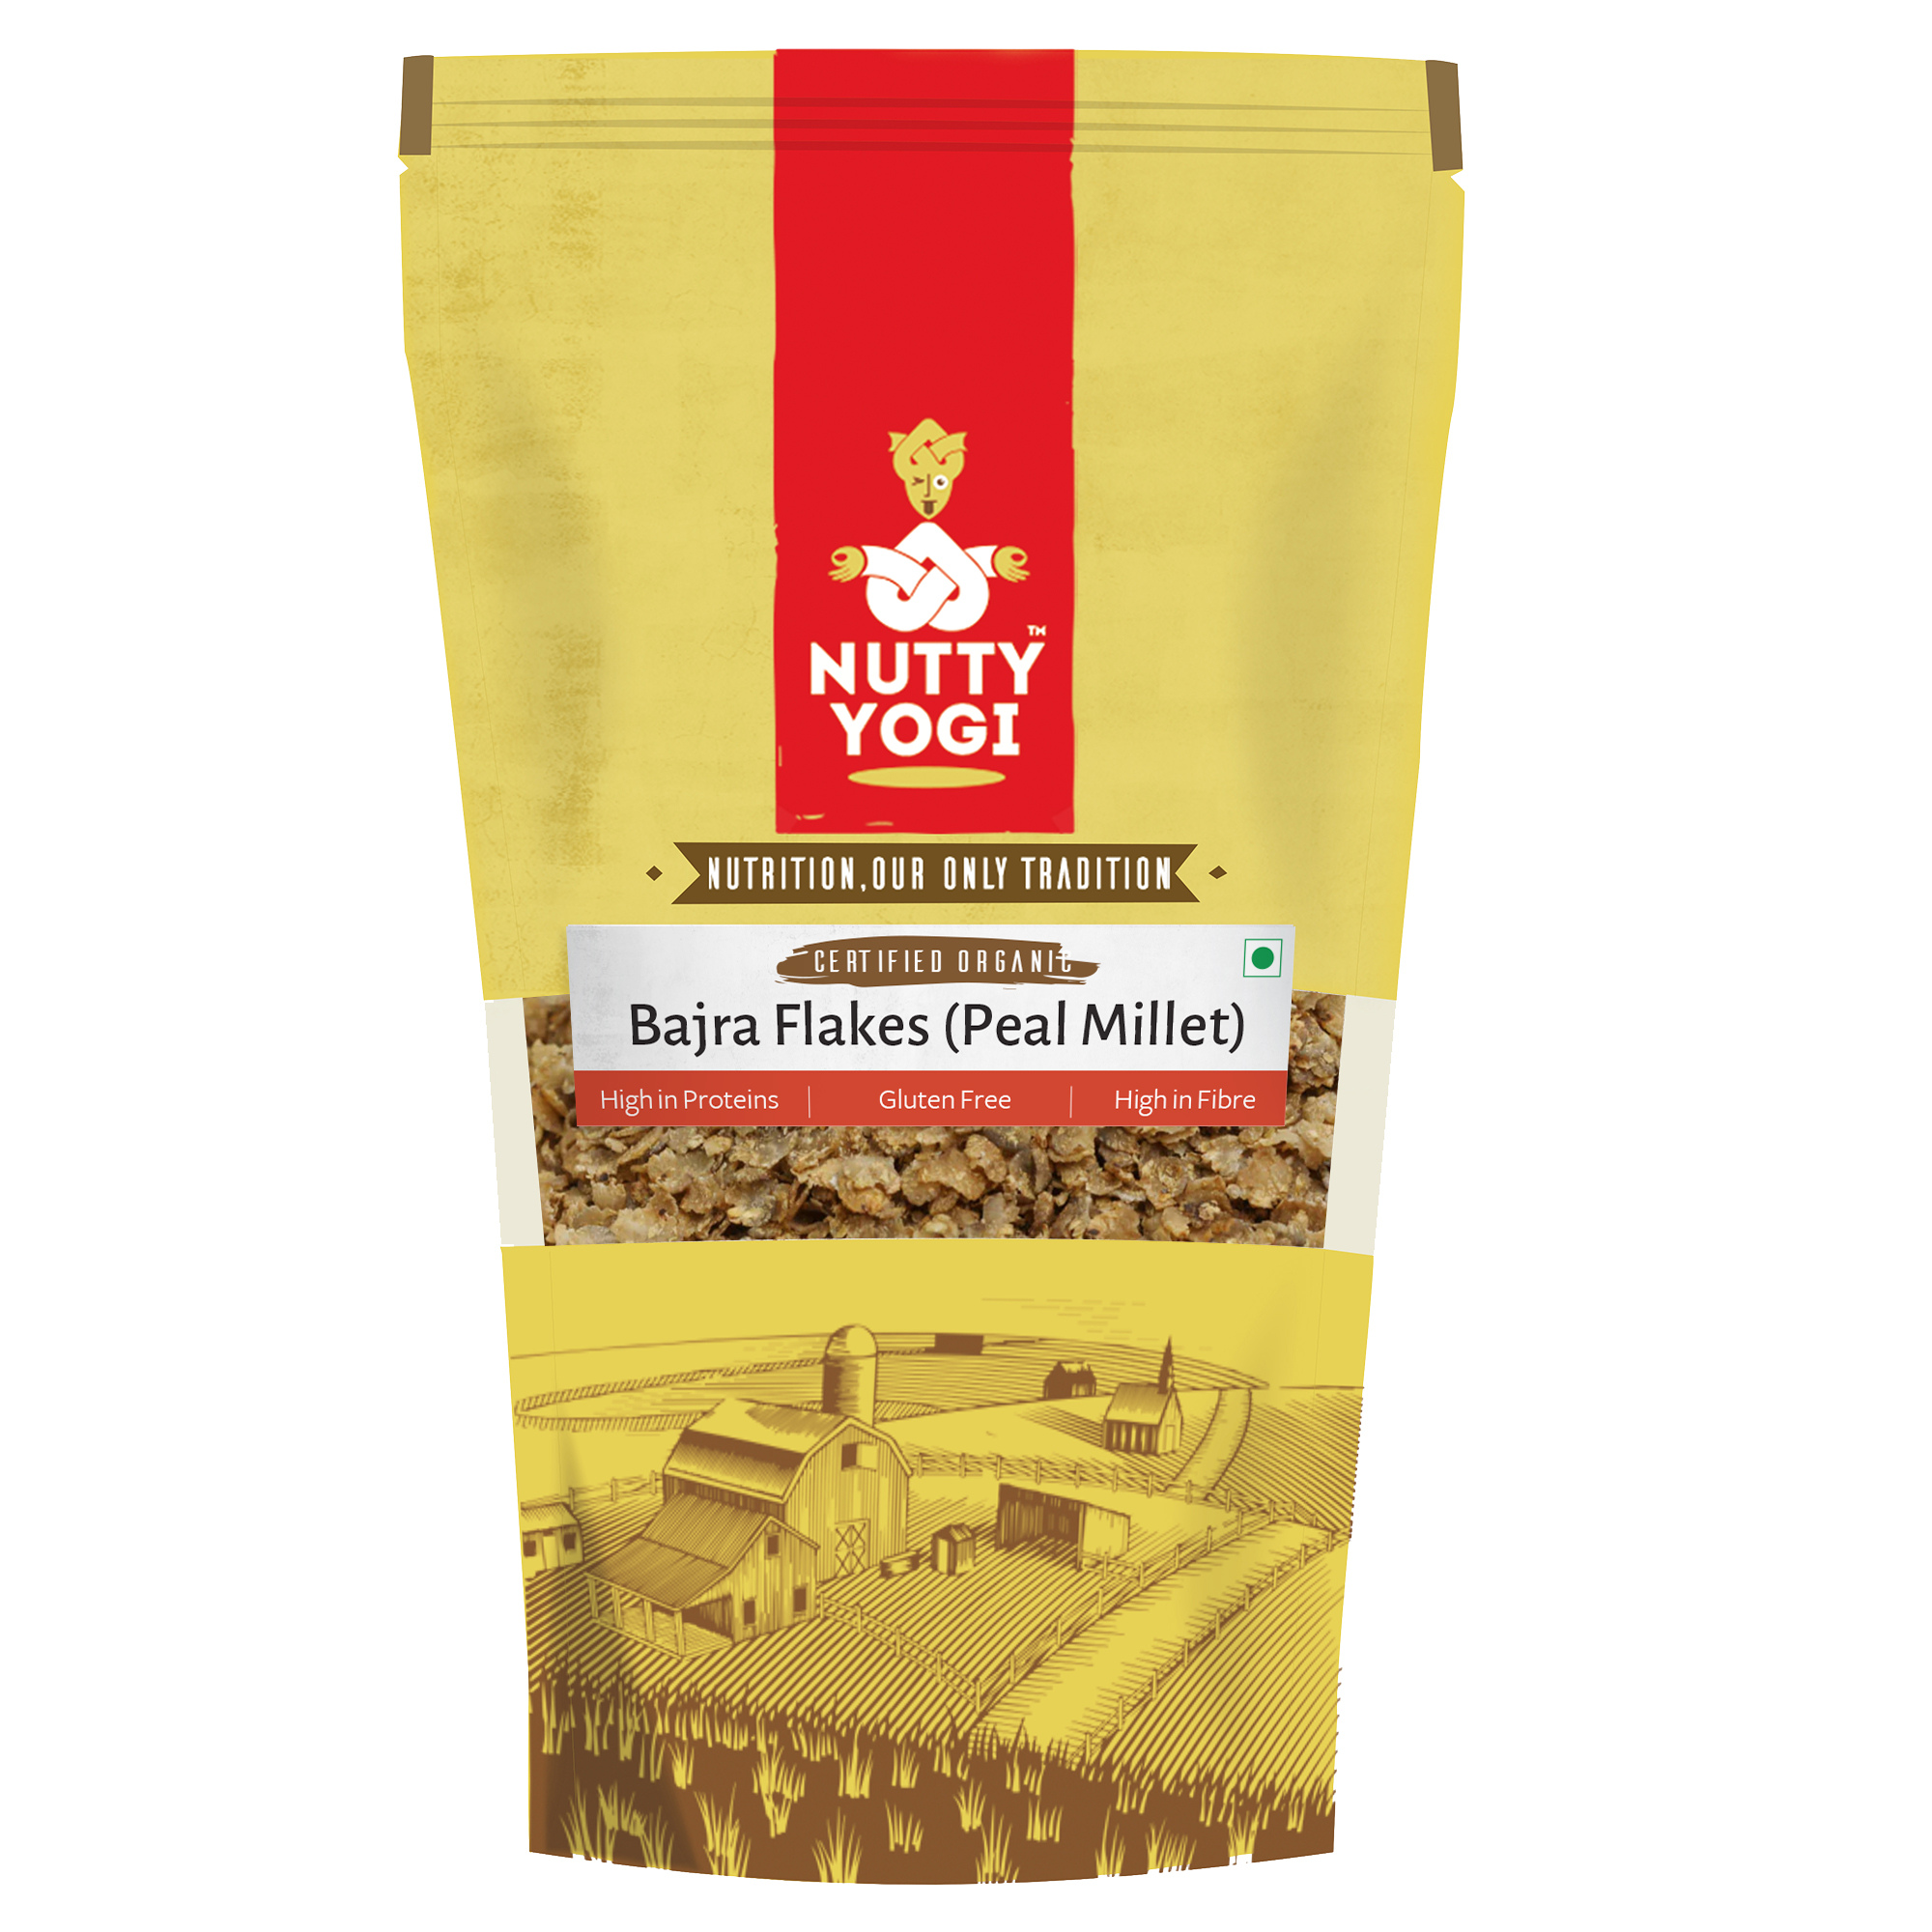 Nutty Yogi Breakfast Flakes - (Ragi, Bajra, Jowar) 200g Each